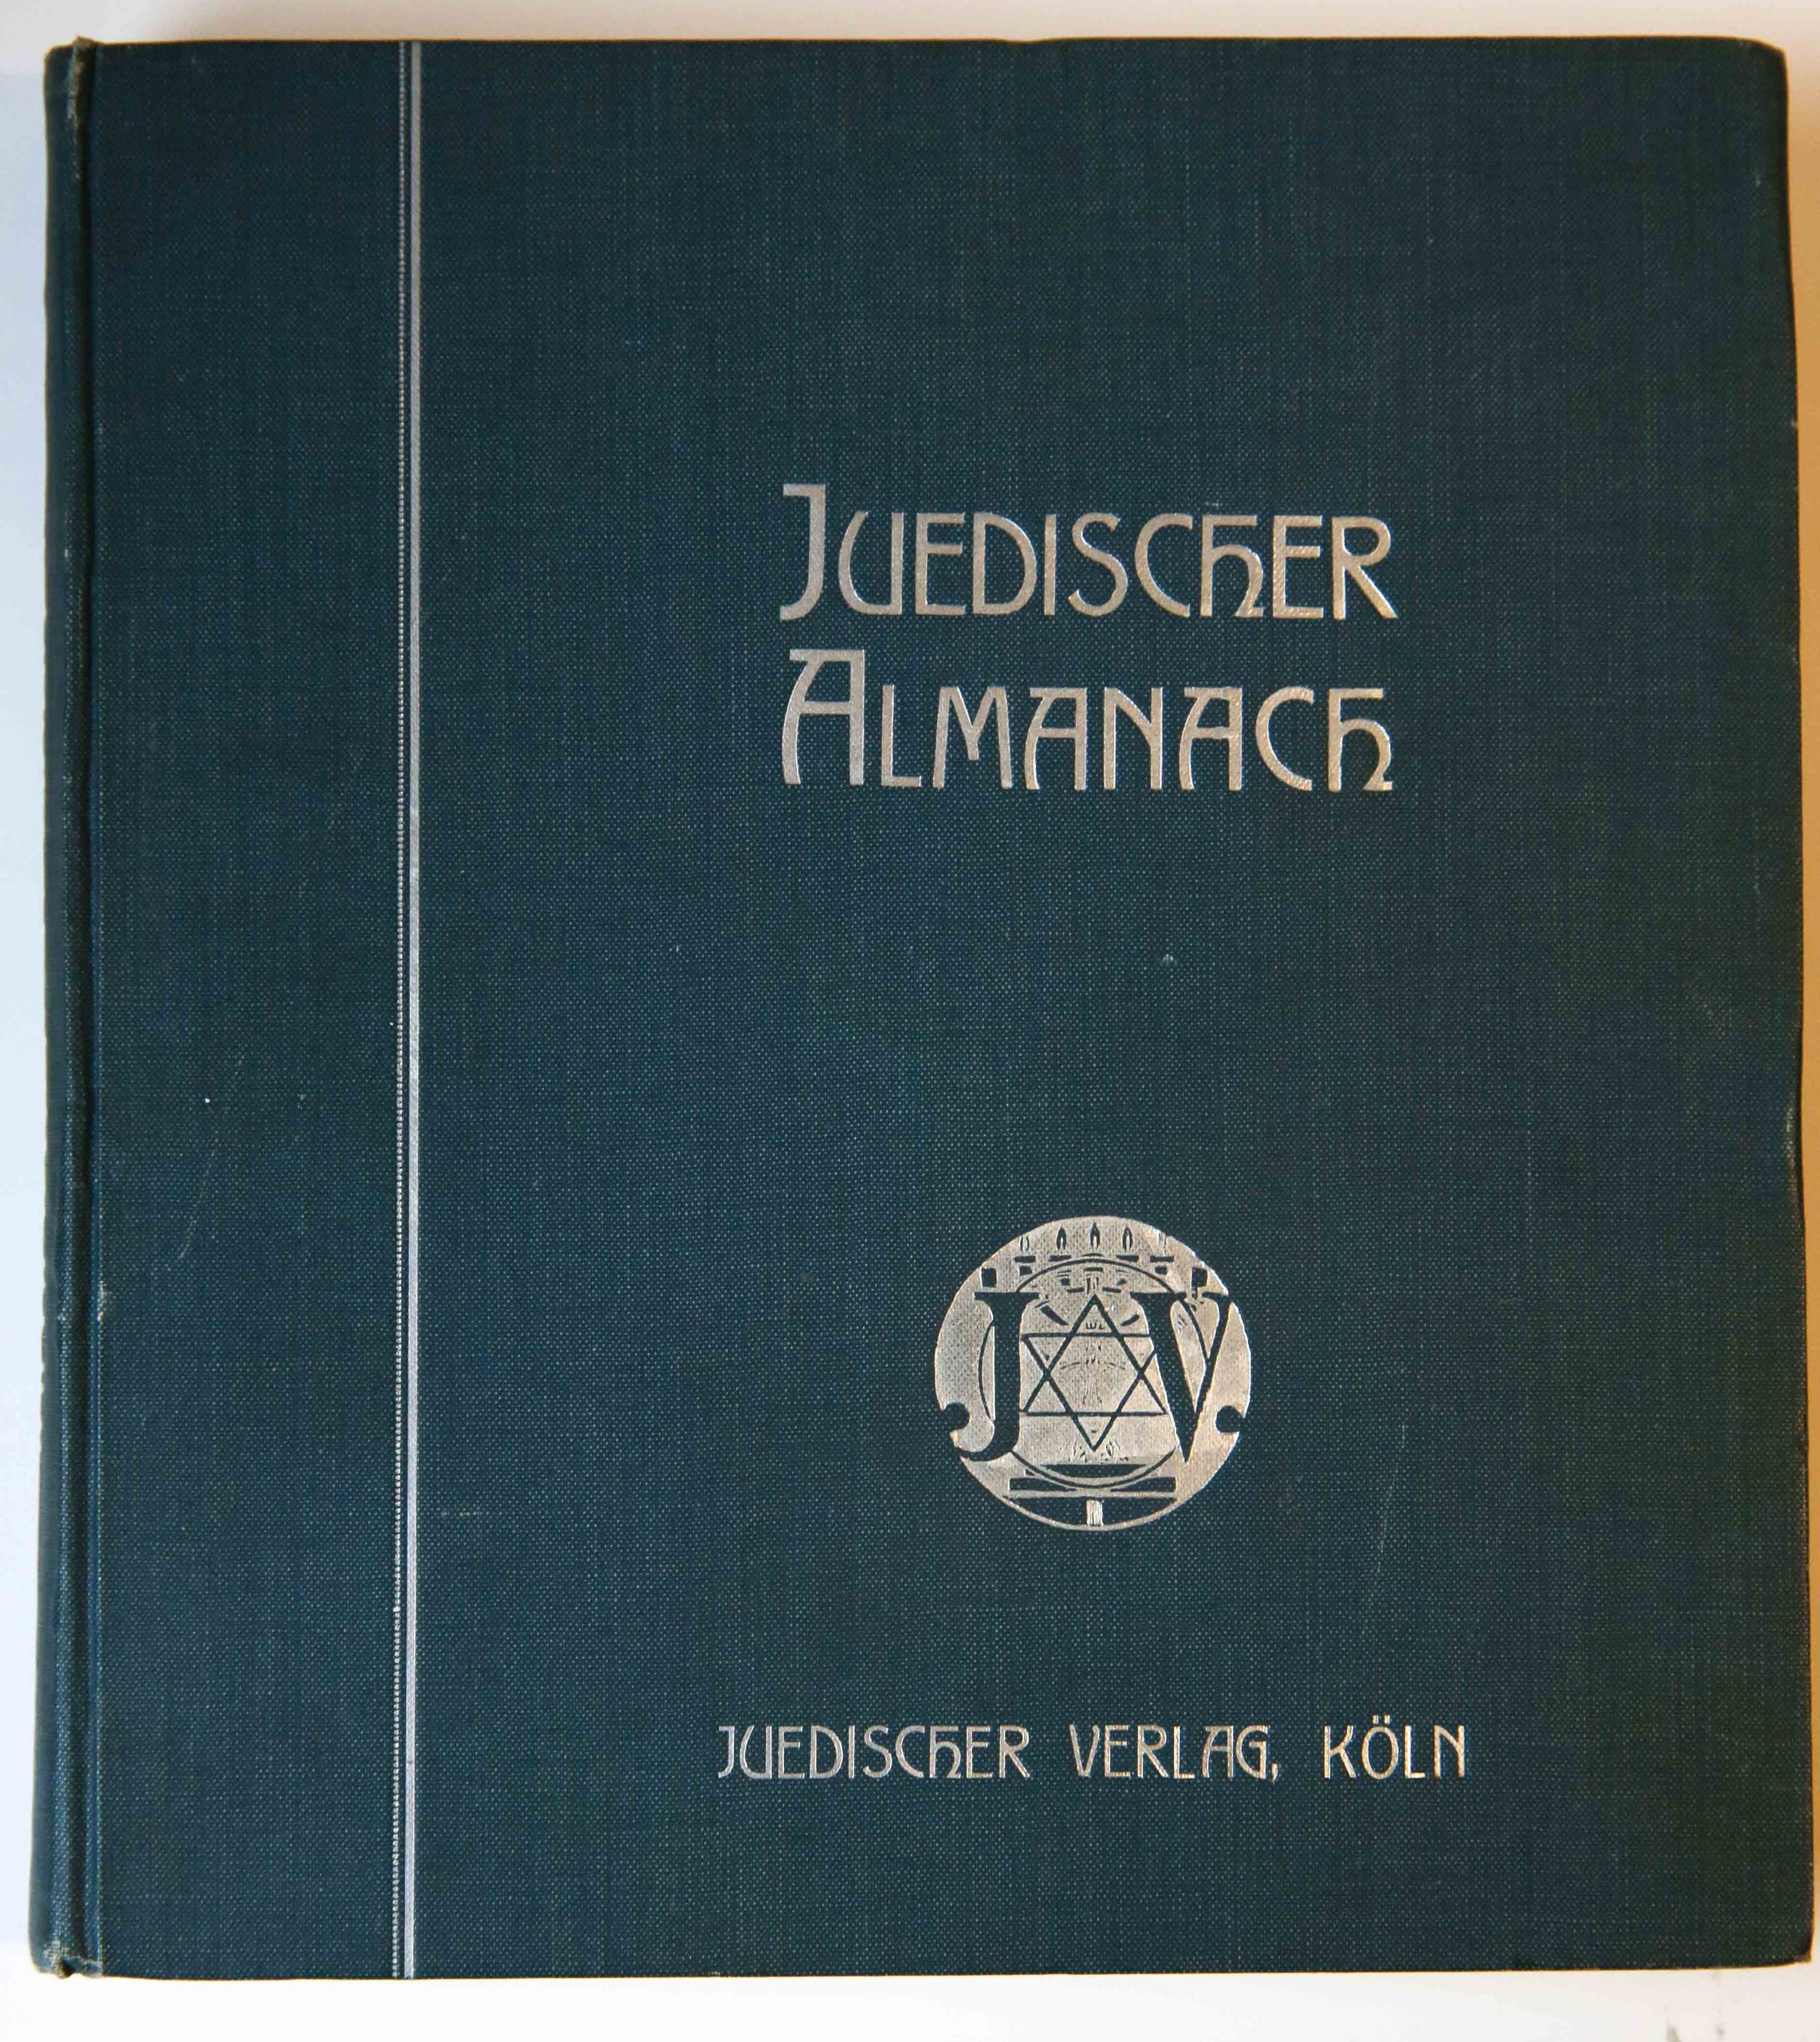 Juedischer Almanach. Teilweise veraenderte neuausgabe, Berlin [1904], 306 pag., geb., geïll. Zeer goed exemplaar.